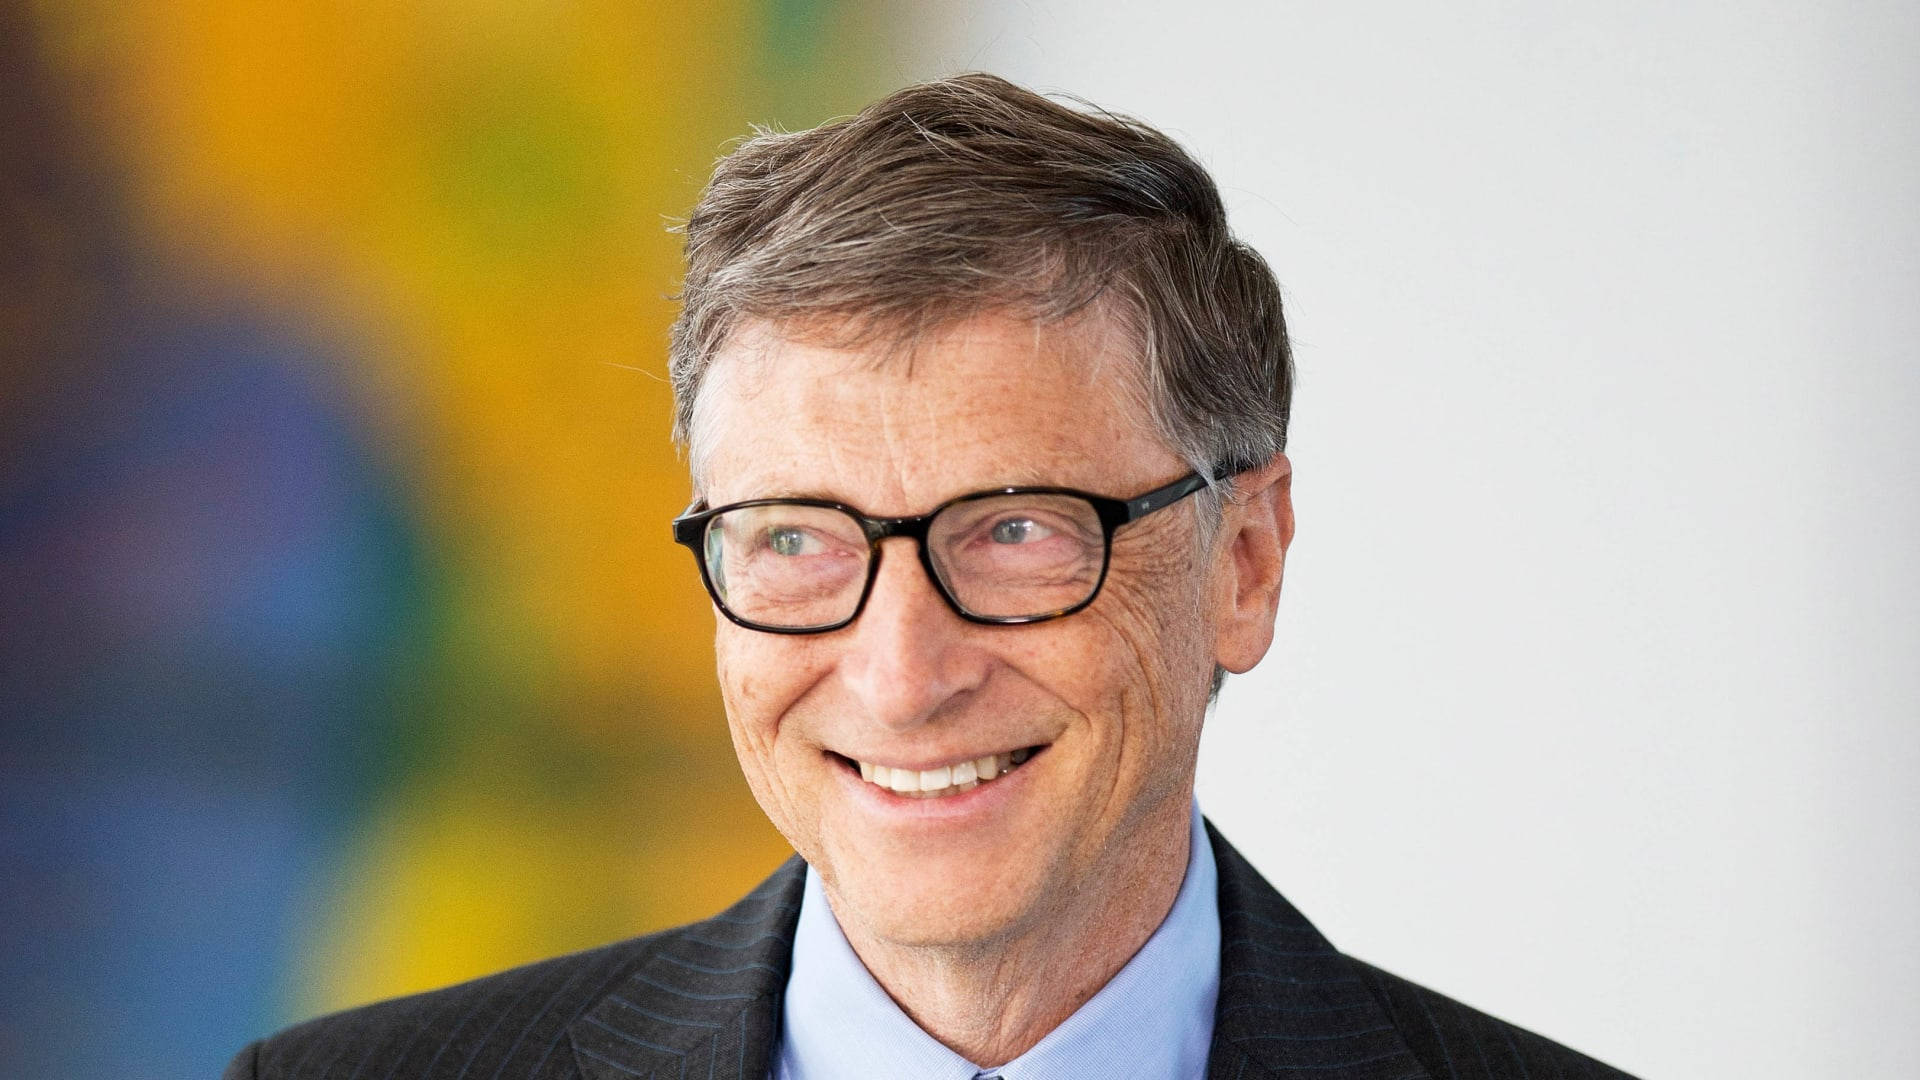 [100+] Bill Gates Wallpapers | Wallpapers.com